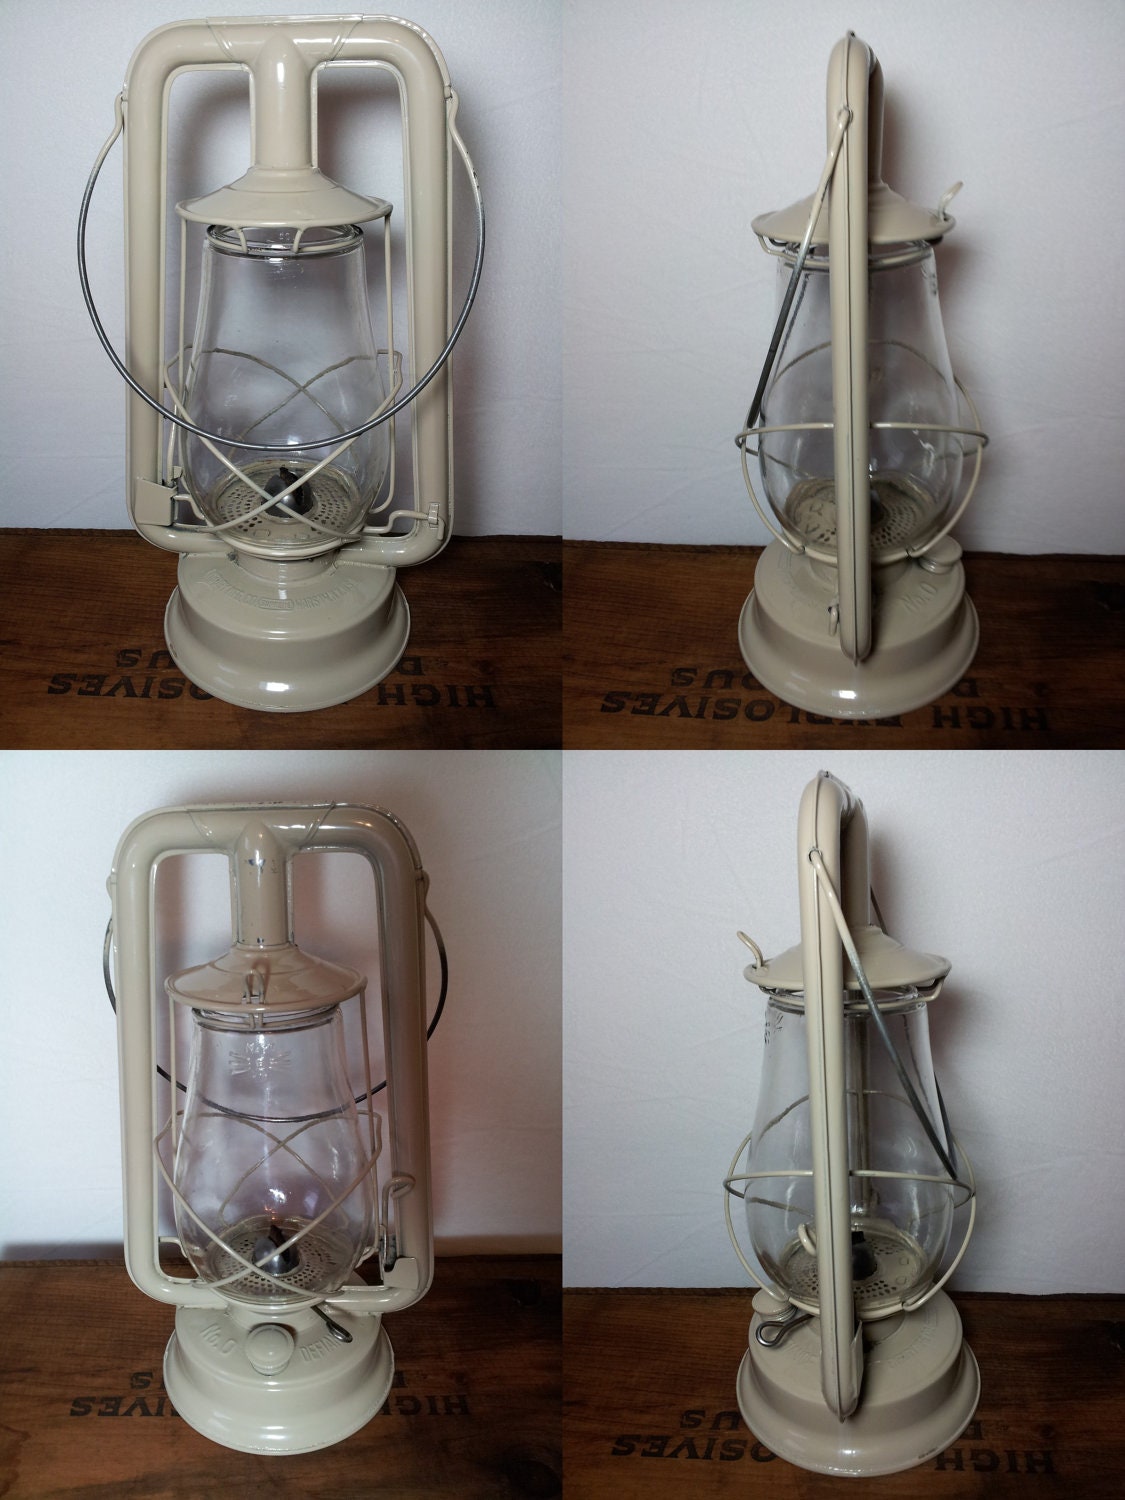 Vintage Embury Number 0 Defiance Barn Lantern